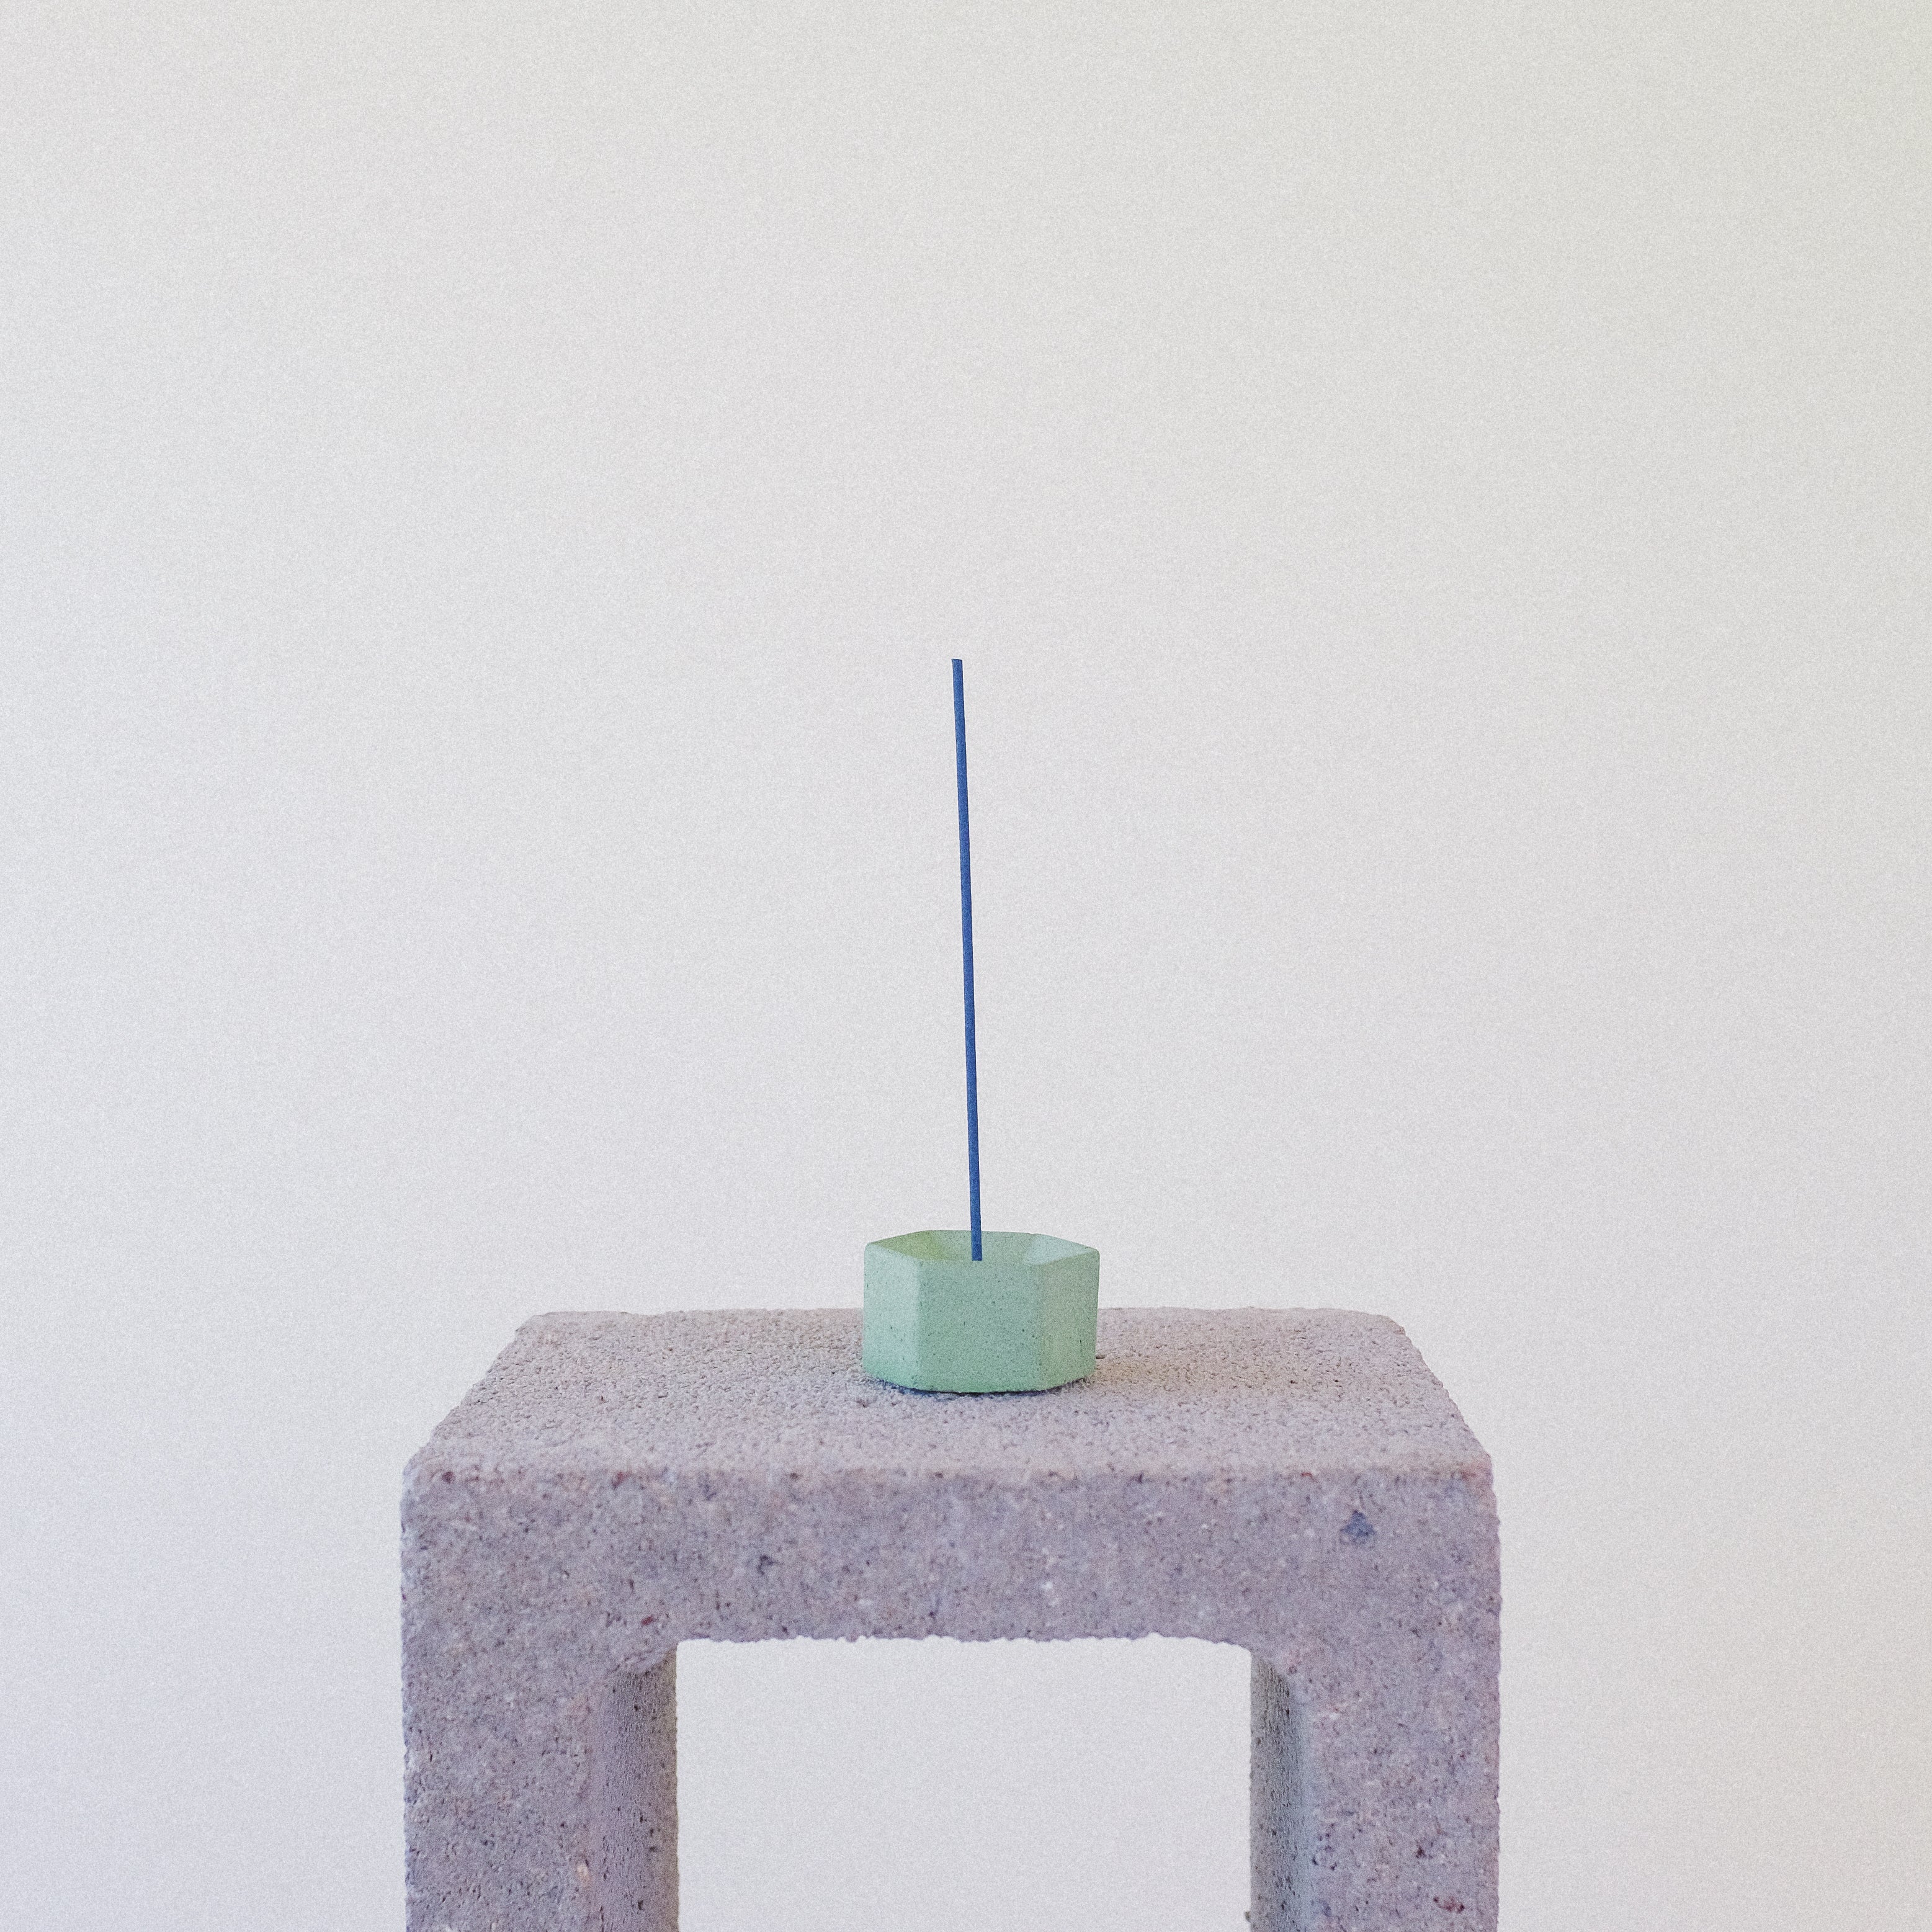 Small Hexagonal Spanish Green Concrete Incense Holder